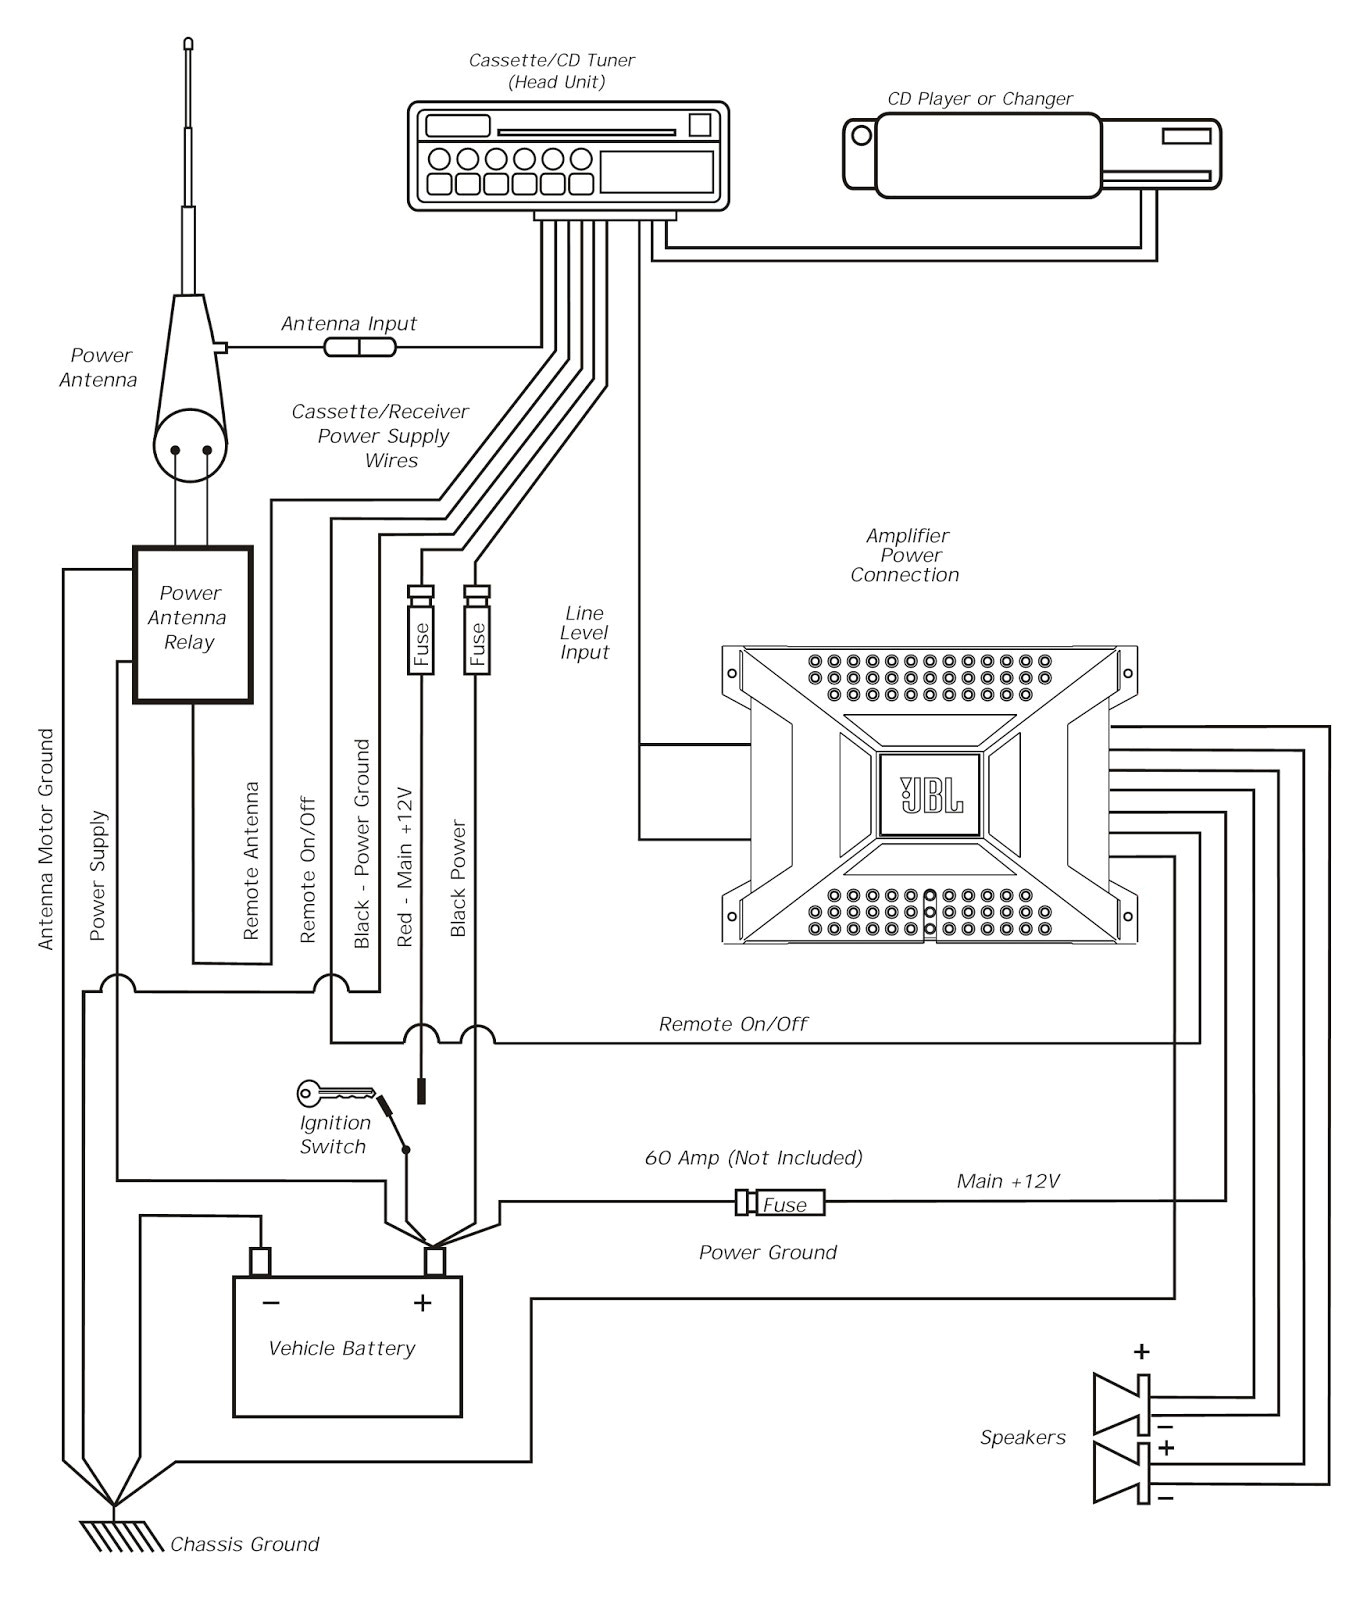 perfect pass wiring diagram beautiful powered subwoofer wiring diagram rate sub wiring diagram collection